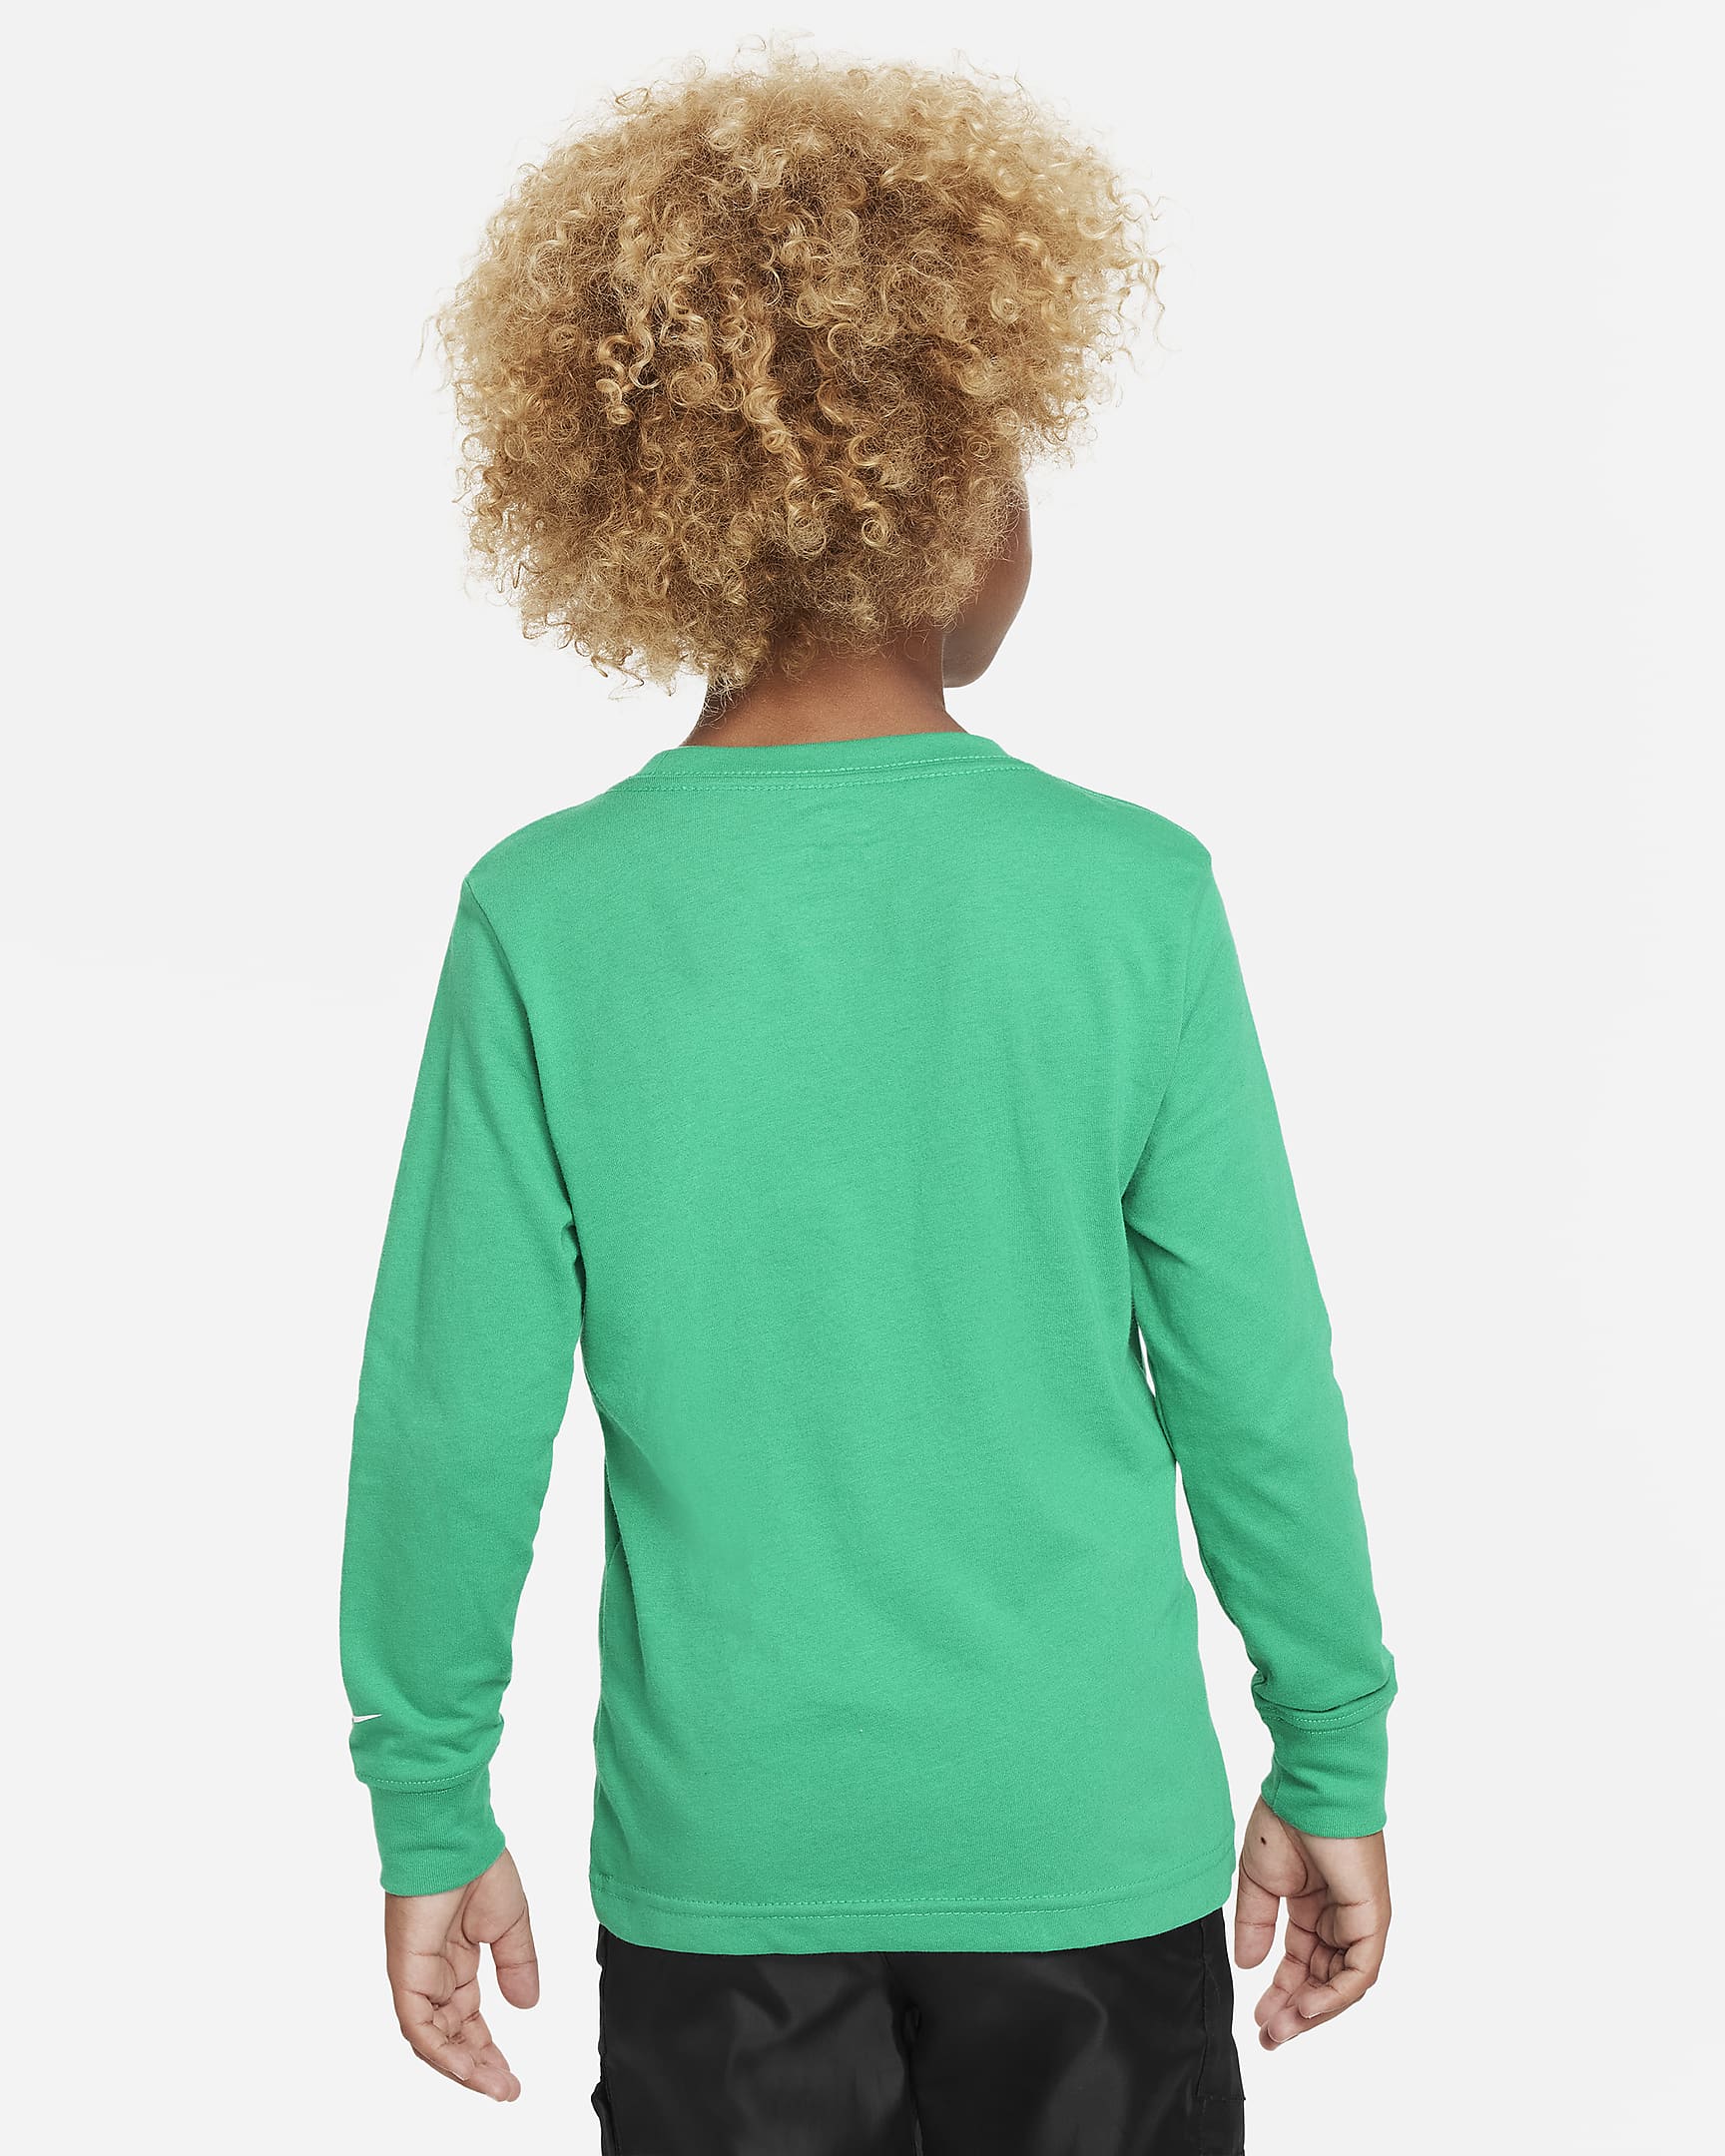 Nike Beast Long Sleeve Basic Tee Little Kids T-Shirt. Nike.com